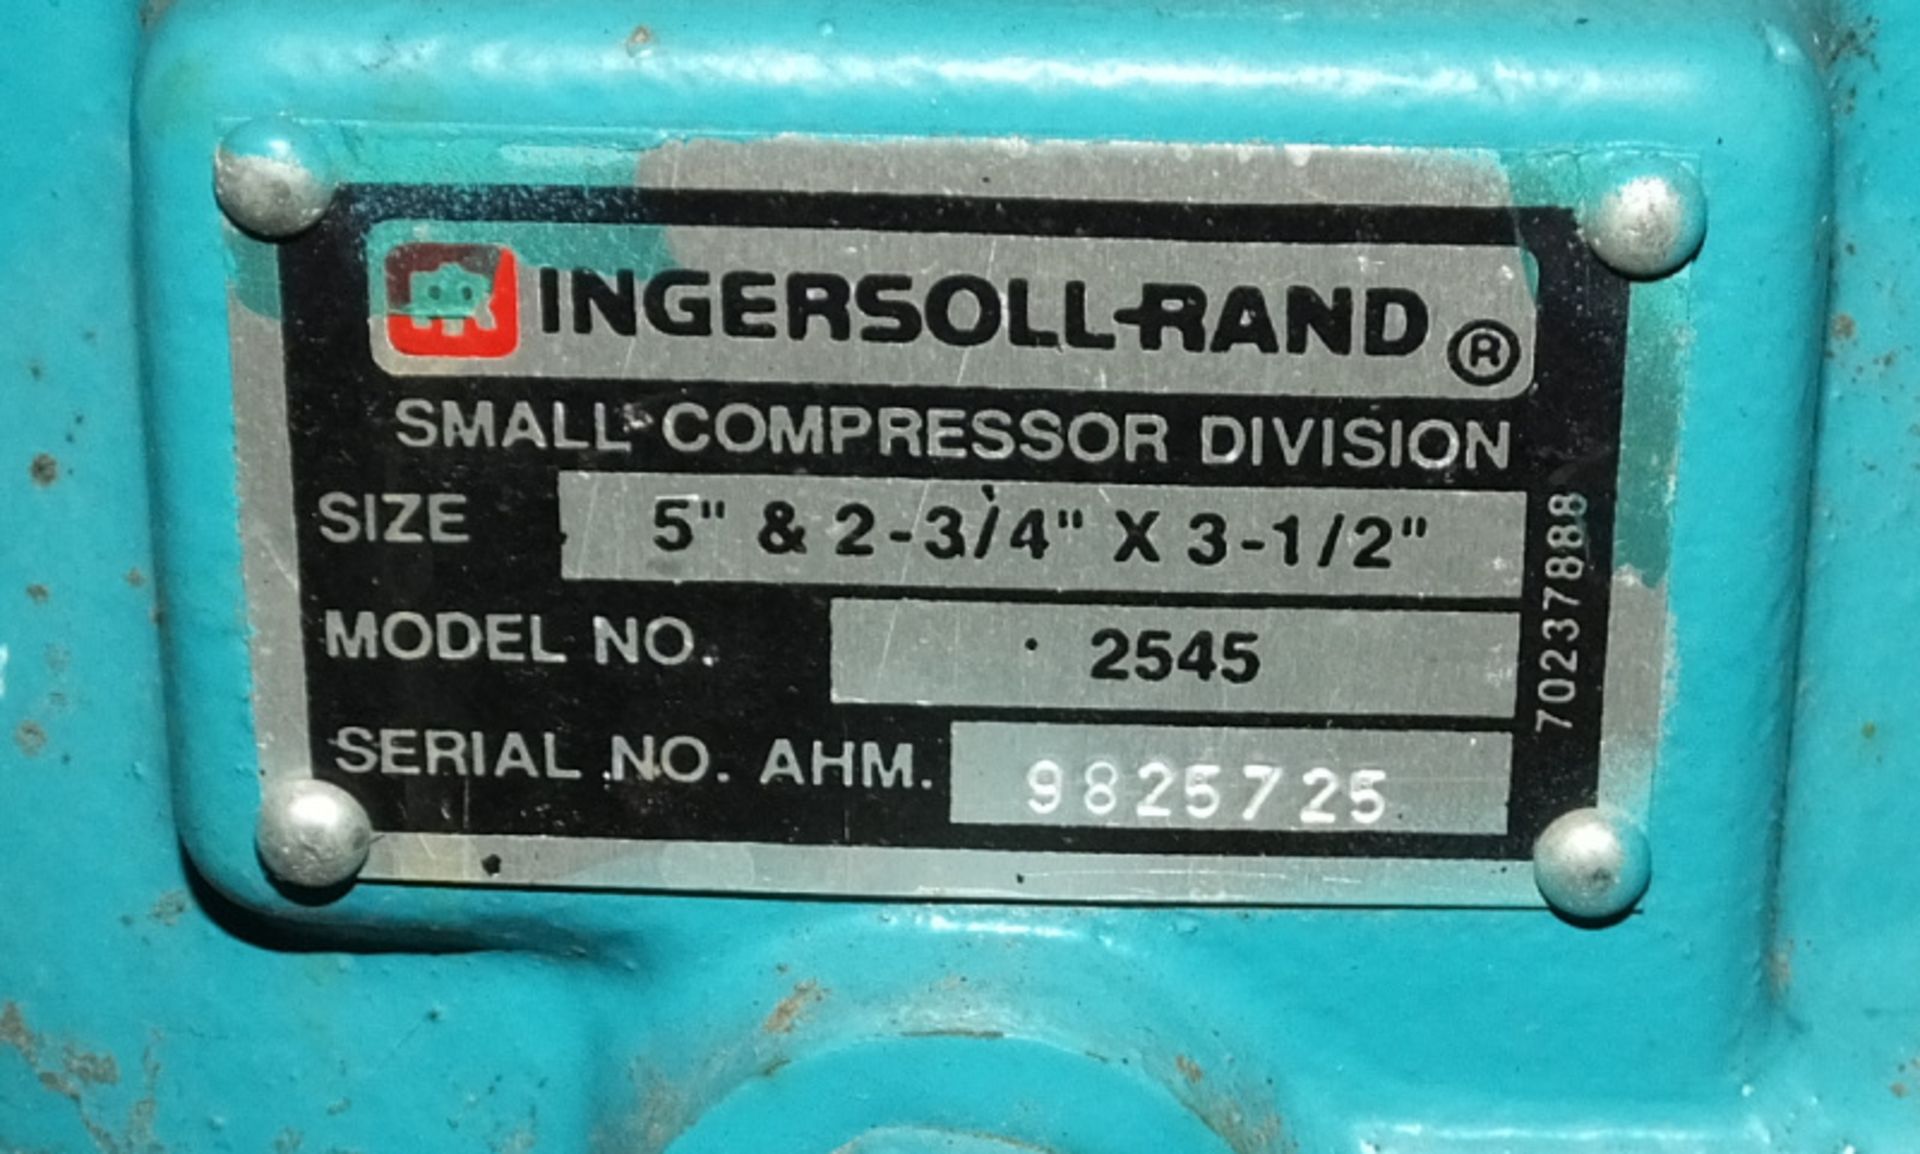 Ingersoll-Rand Aeolus T30 compressor - 500L - 14bar - Image 6 of 7